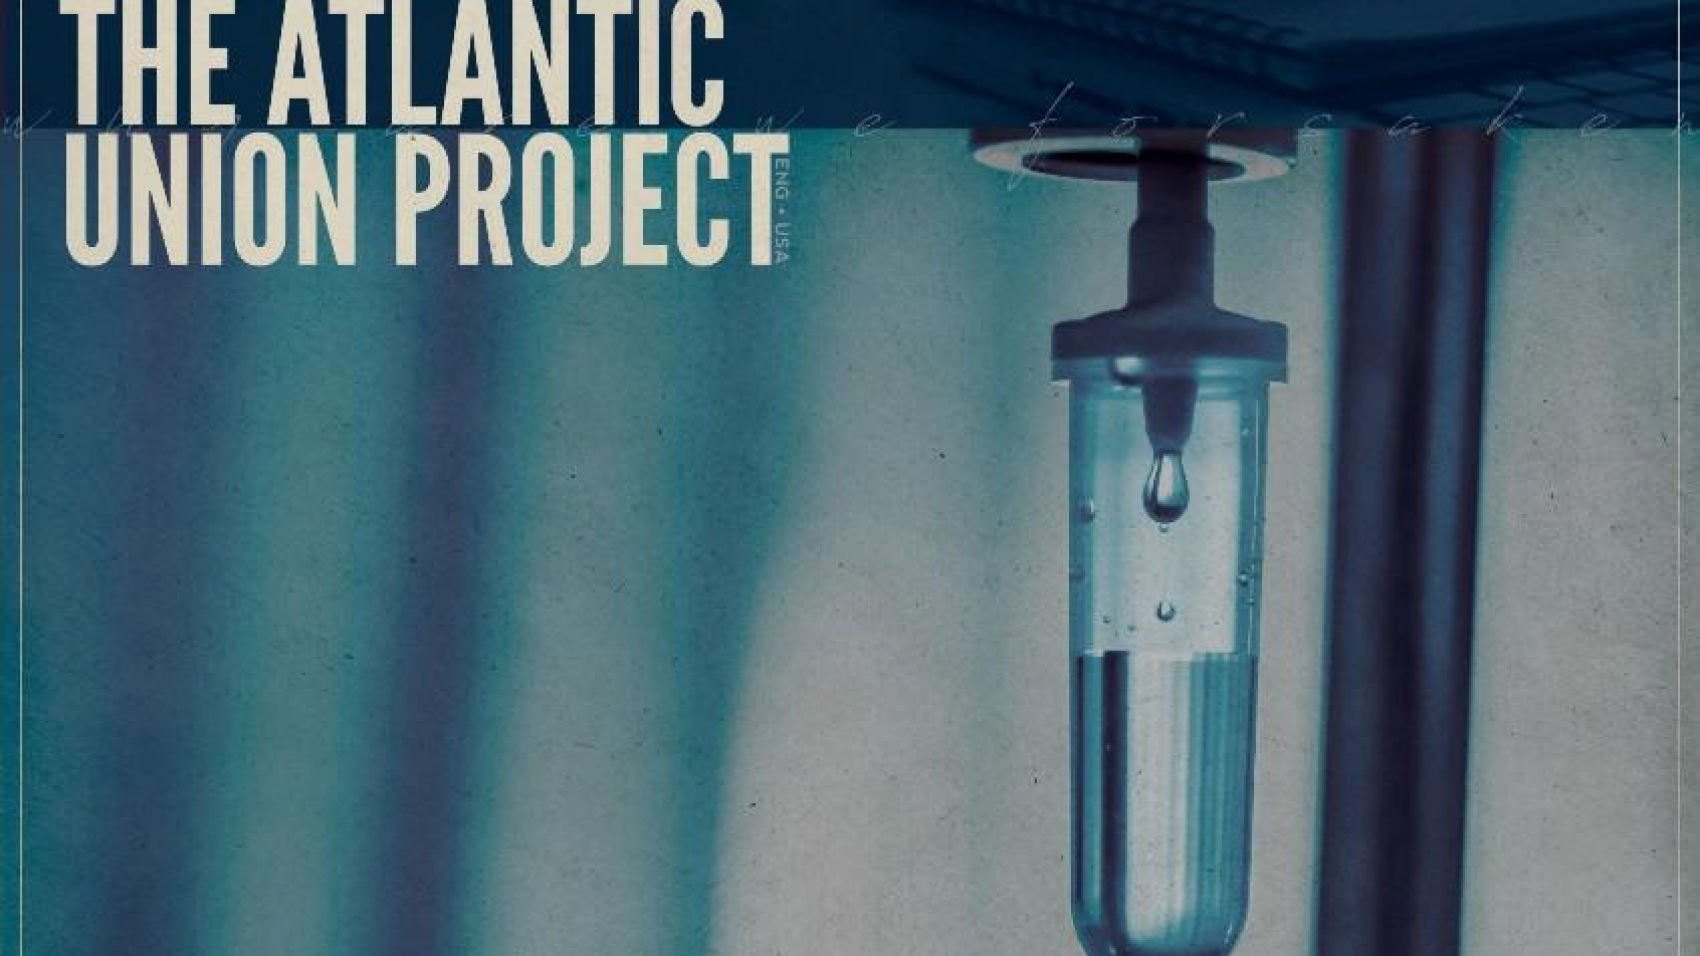 The Atlantic Union Project